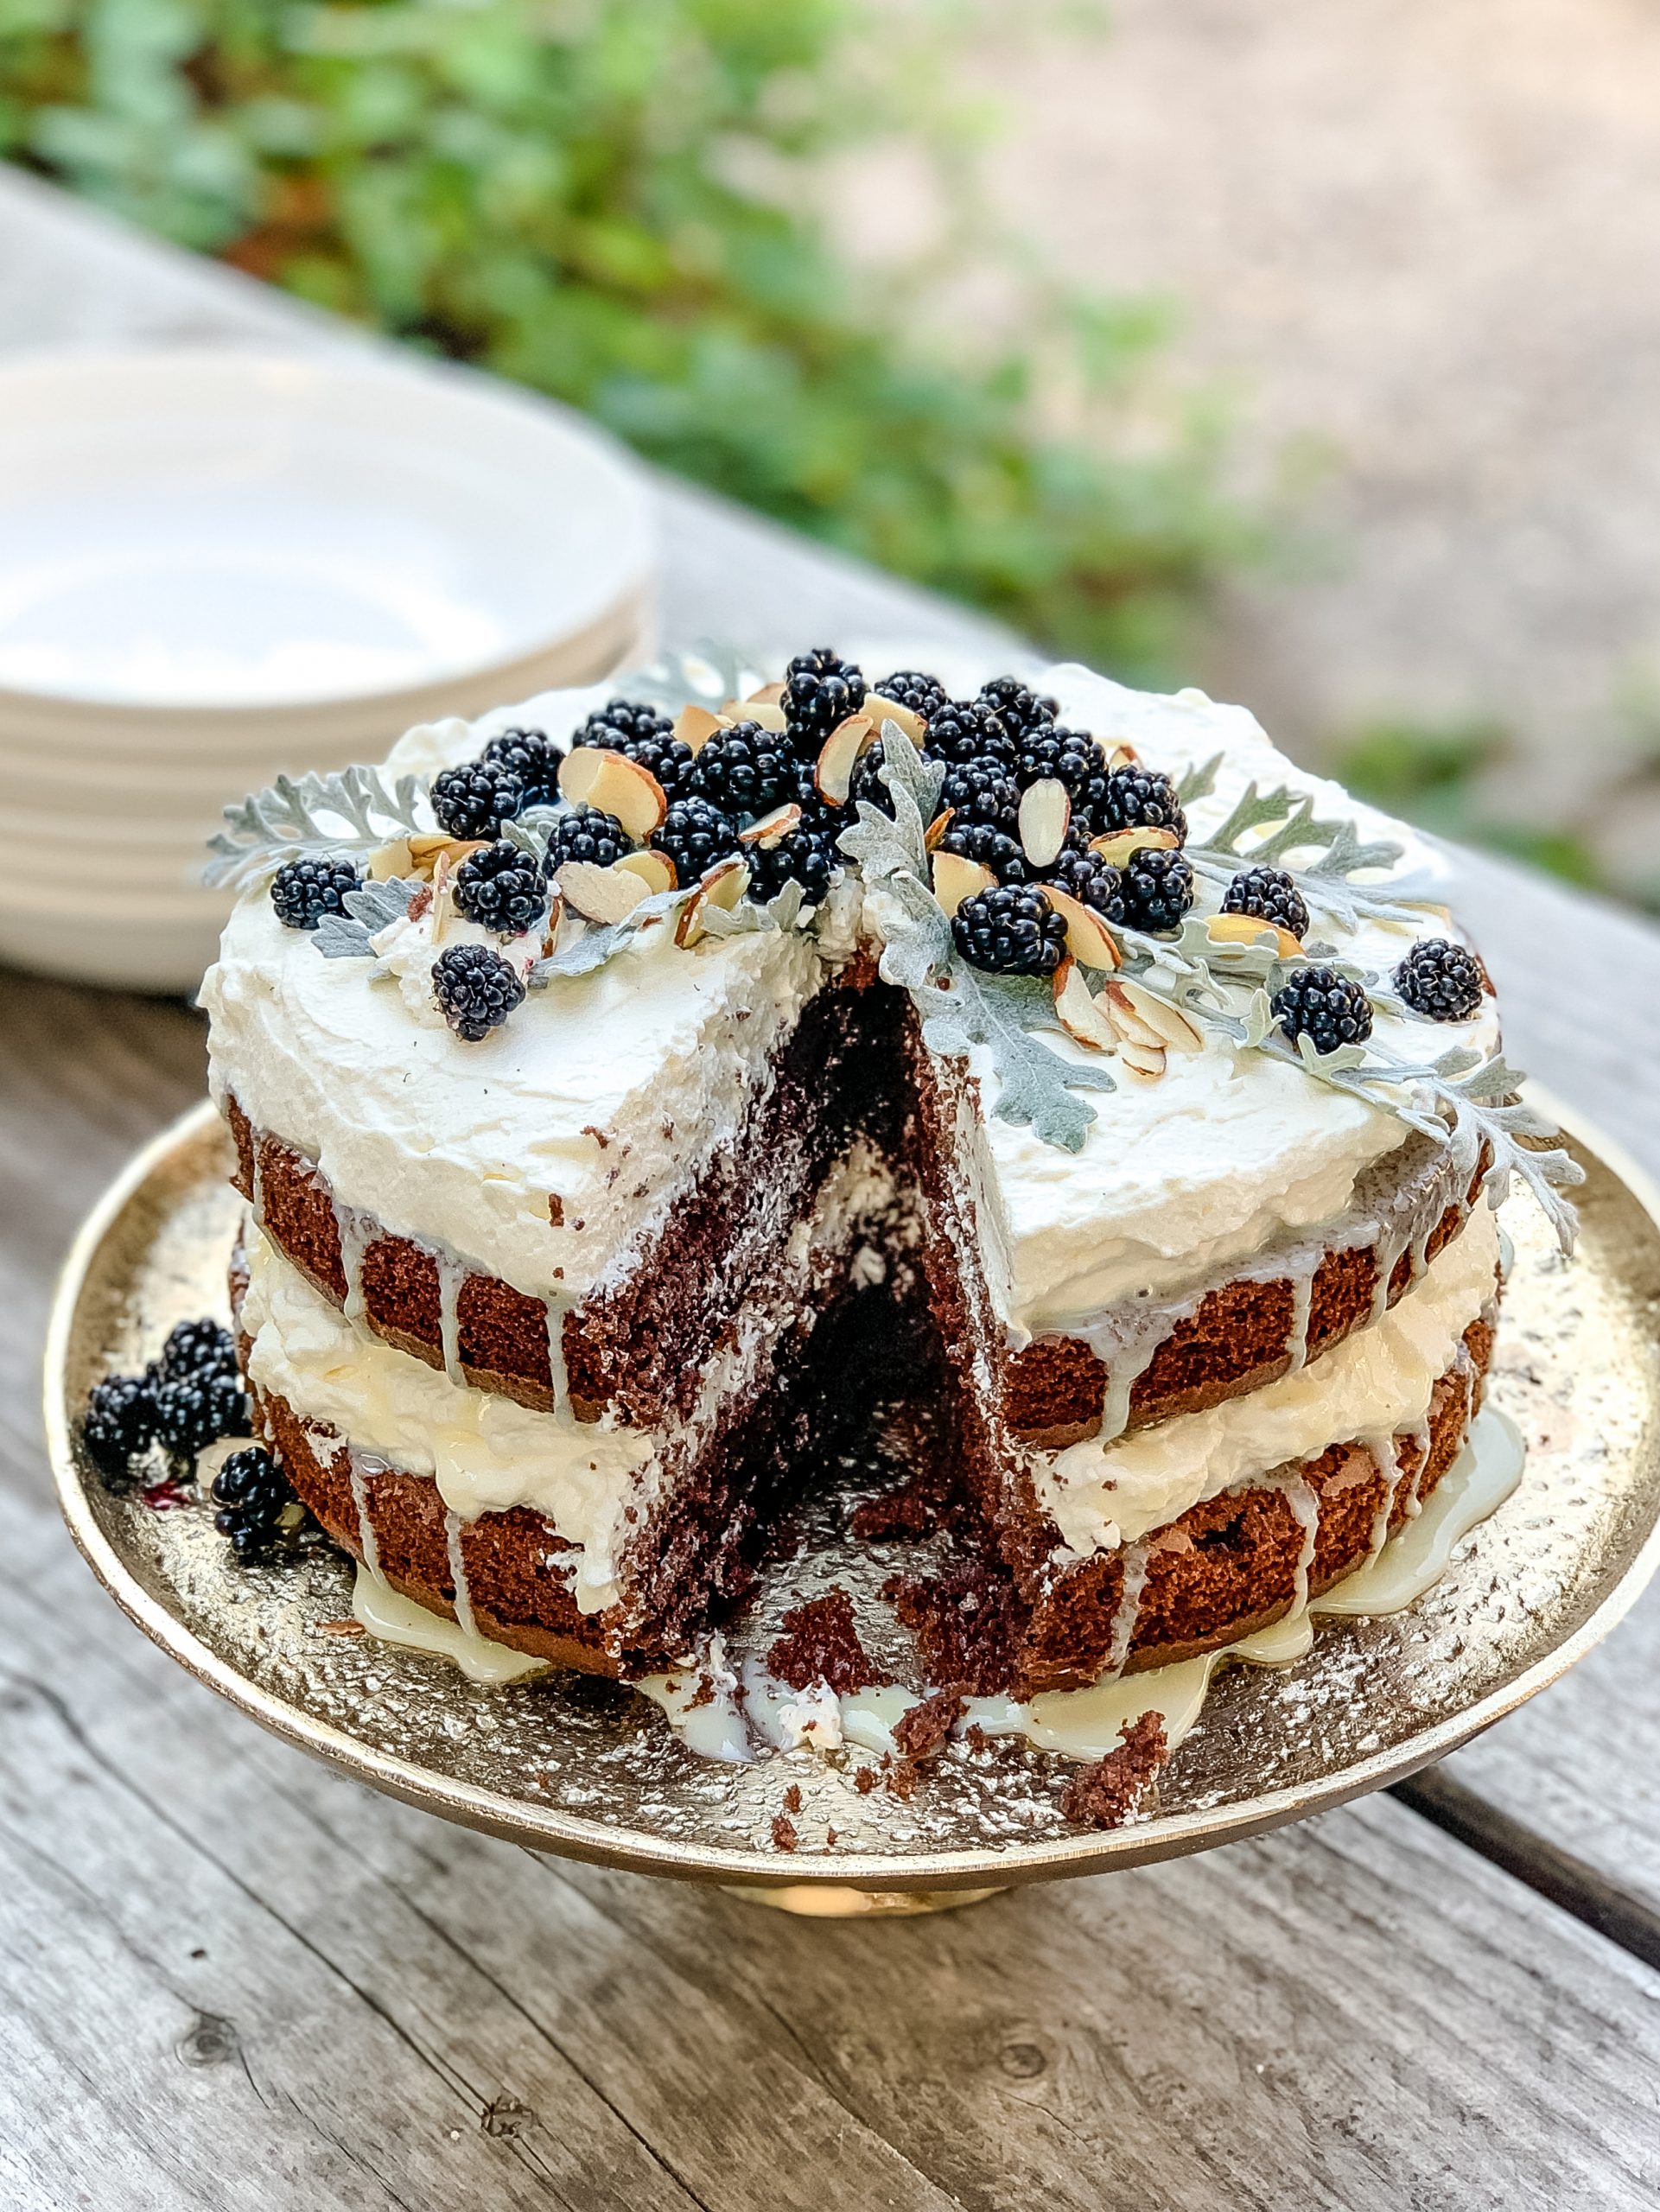 25 Simple Cake Decorating Ideas For Birthdays